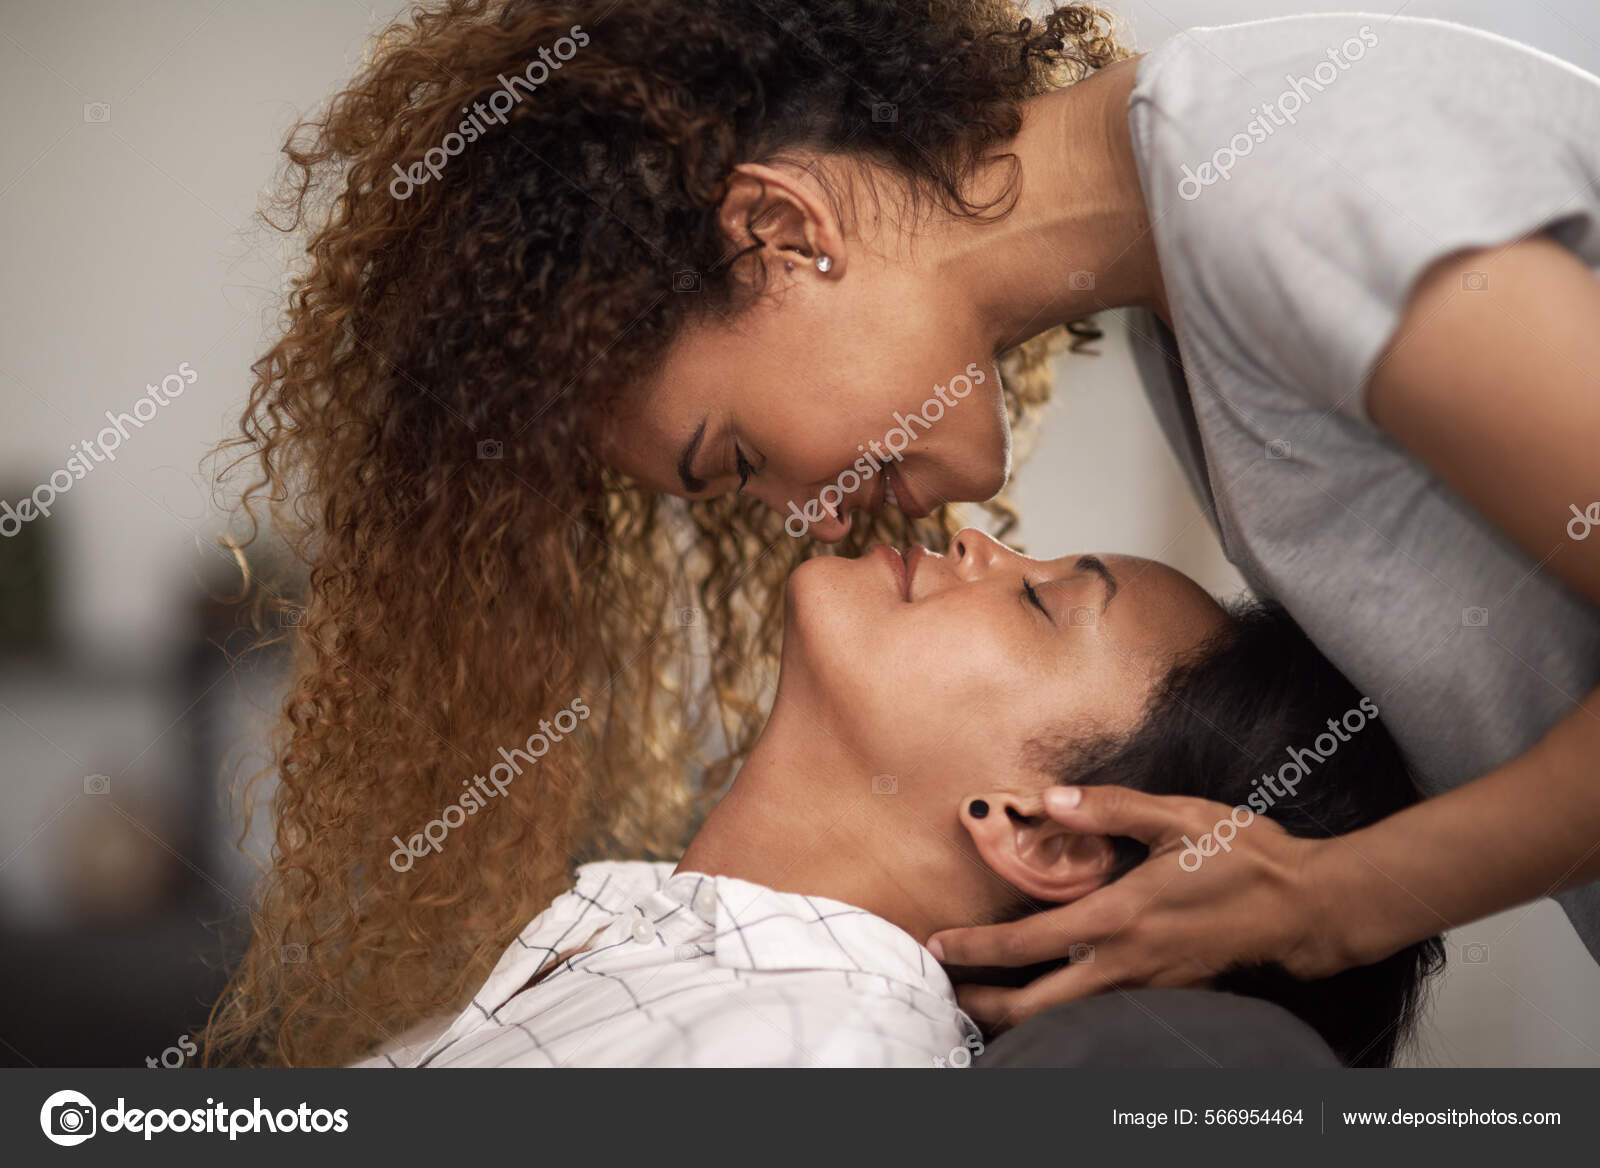 married couples explicit sex pics mrs